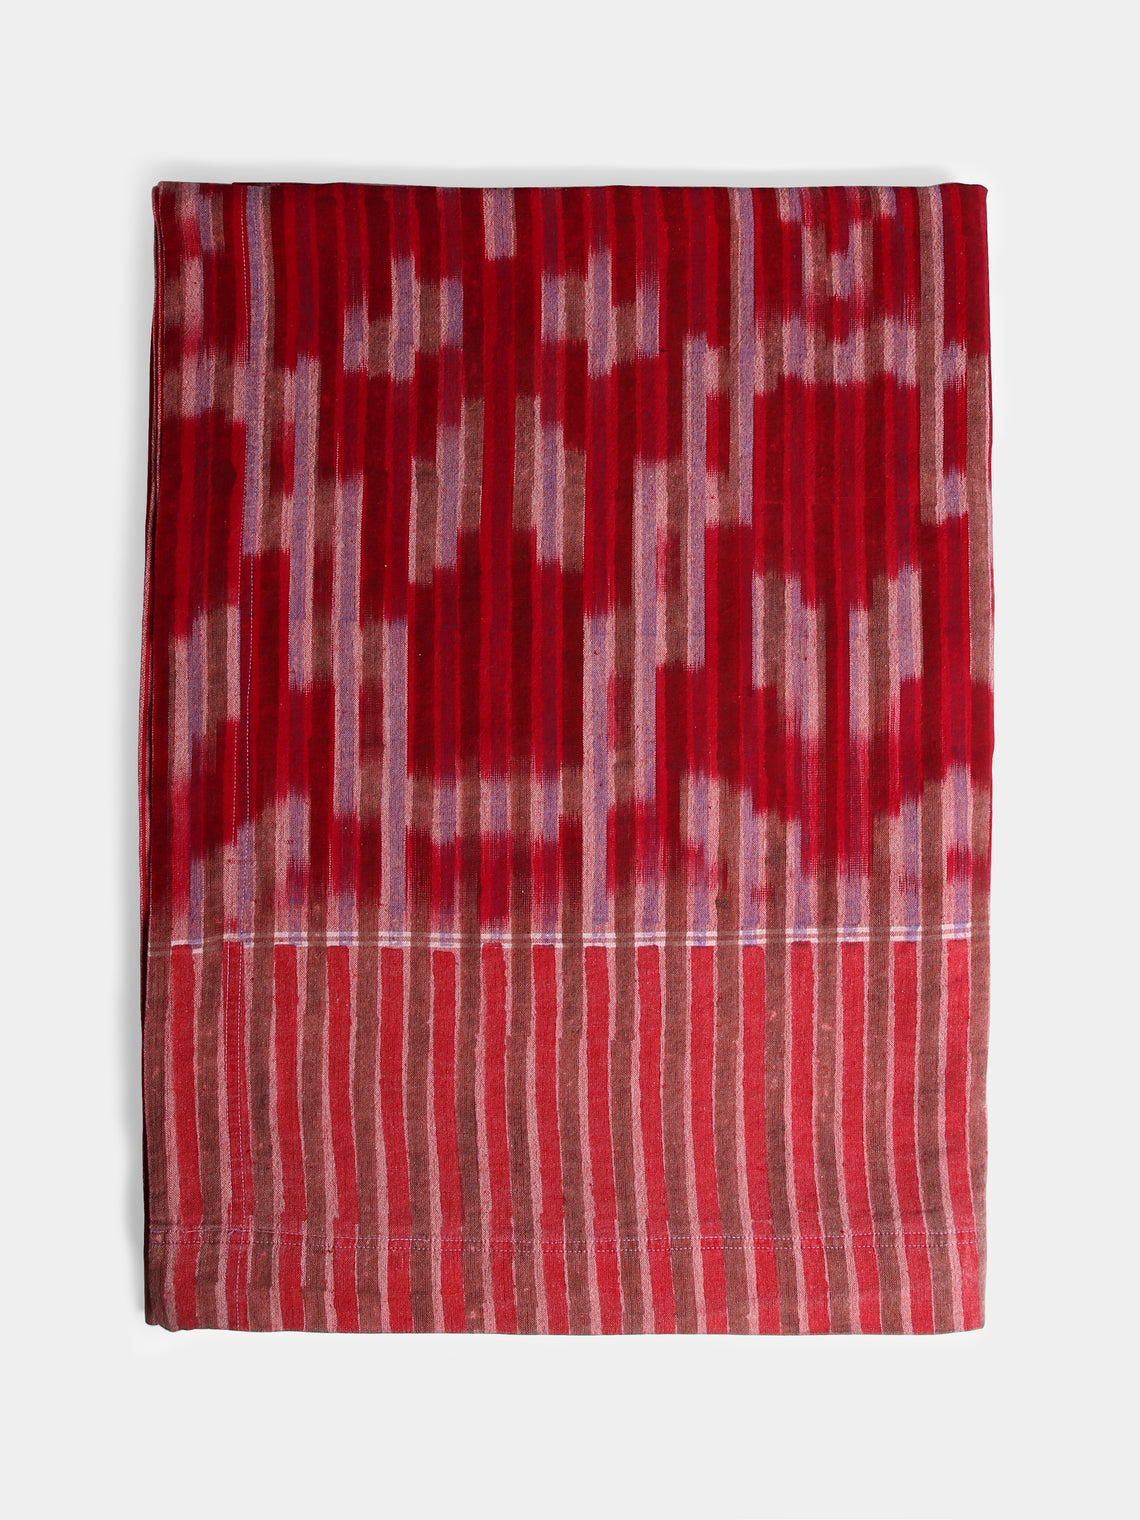 Gregory Parkinson - Lavender Rose Rain Block-Printed Cotton Tablecloth - Multiple - ABASK - 